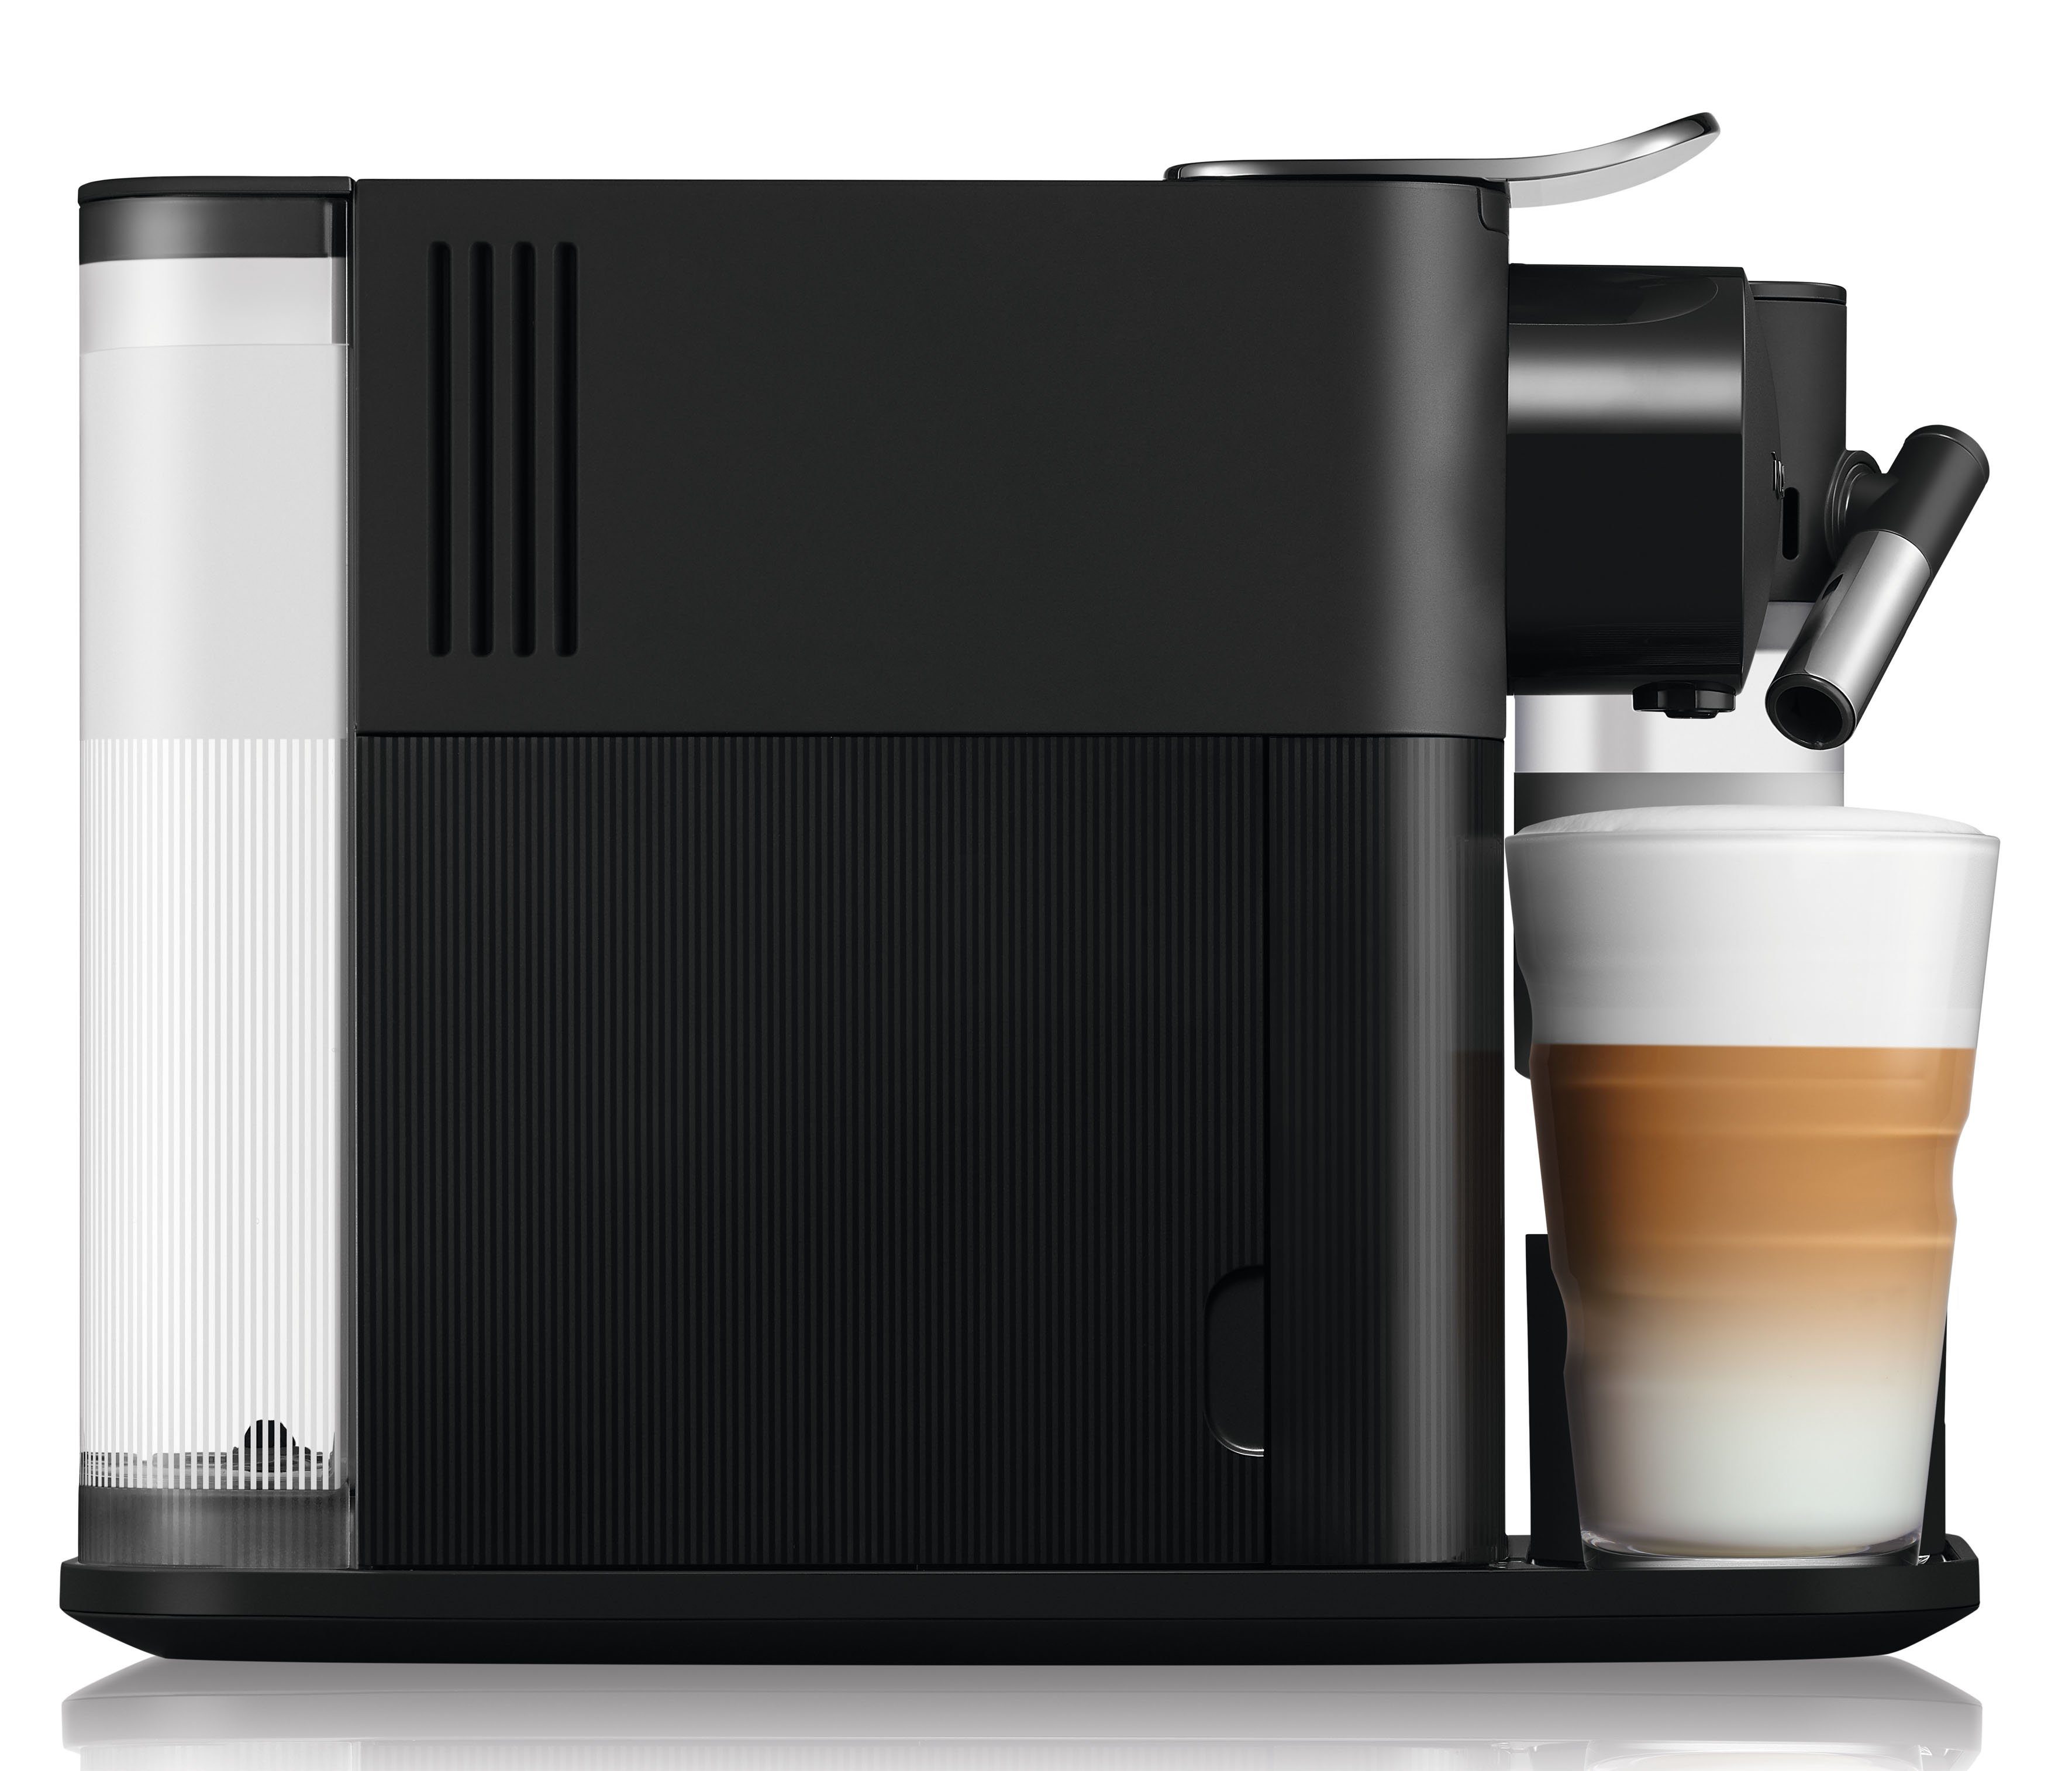 Nespresso Kapselmaschine mit 7 Black, Kapseln von DeLonghi, EN510.B Willkommenspaket Lattissima One inkl